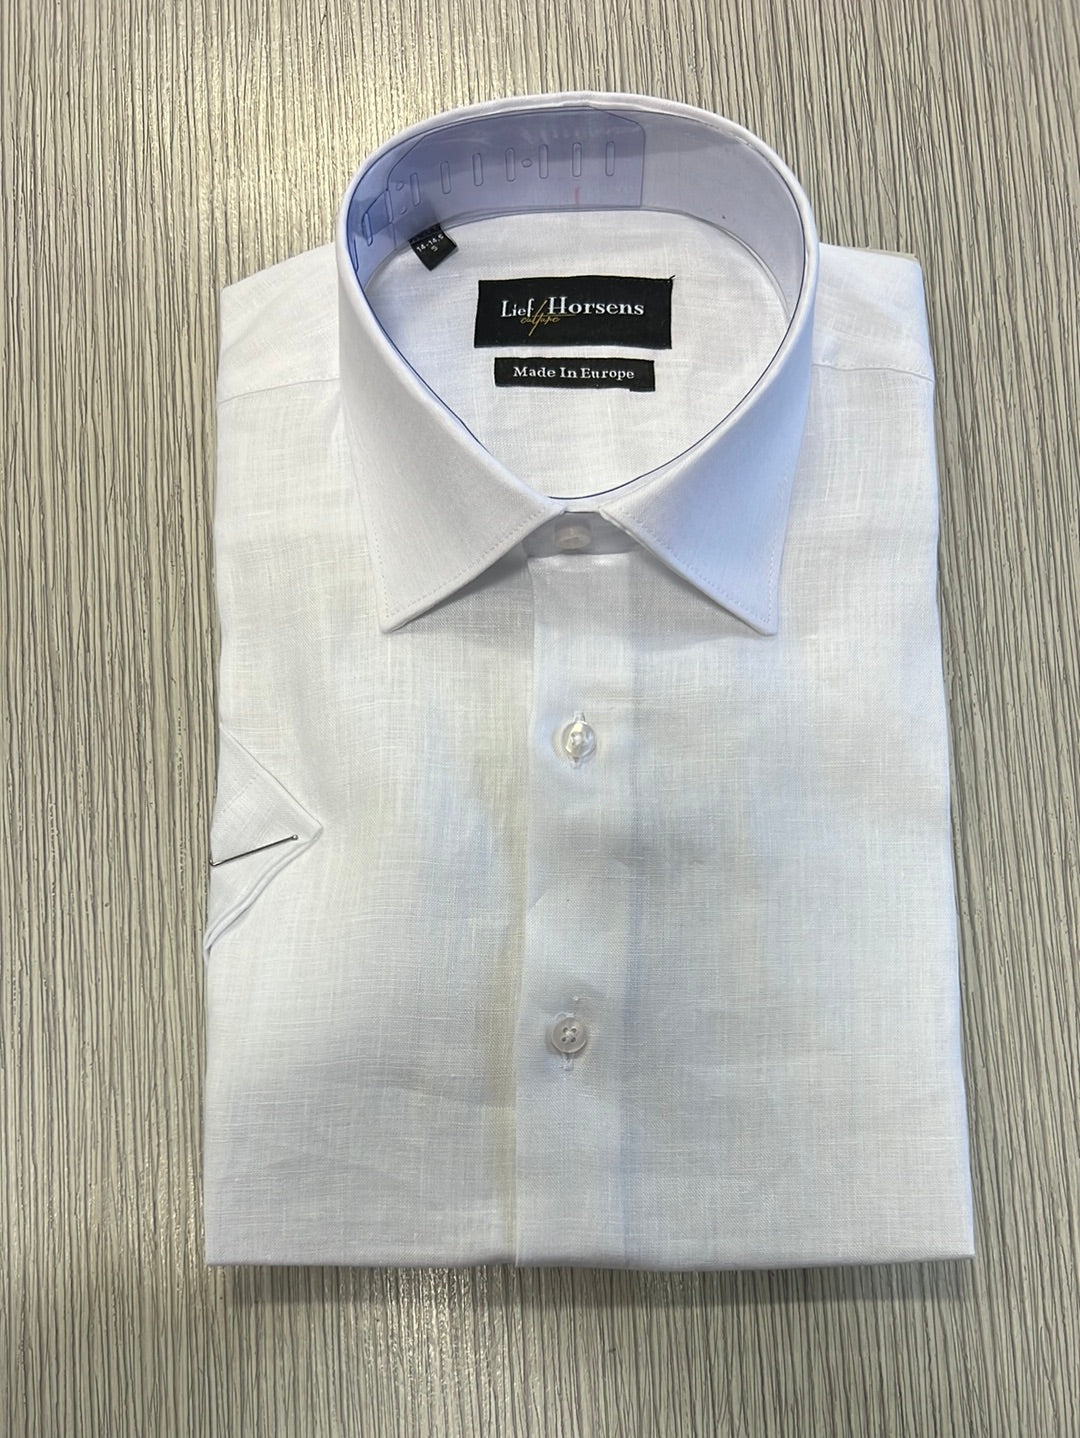 L.H Gold S/S Solid Linen  Shirt